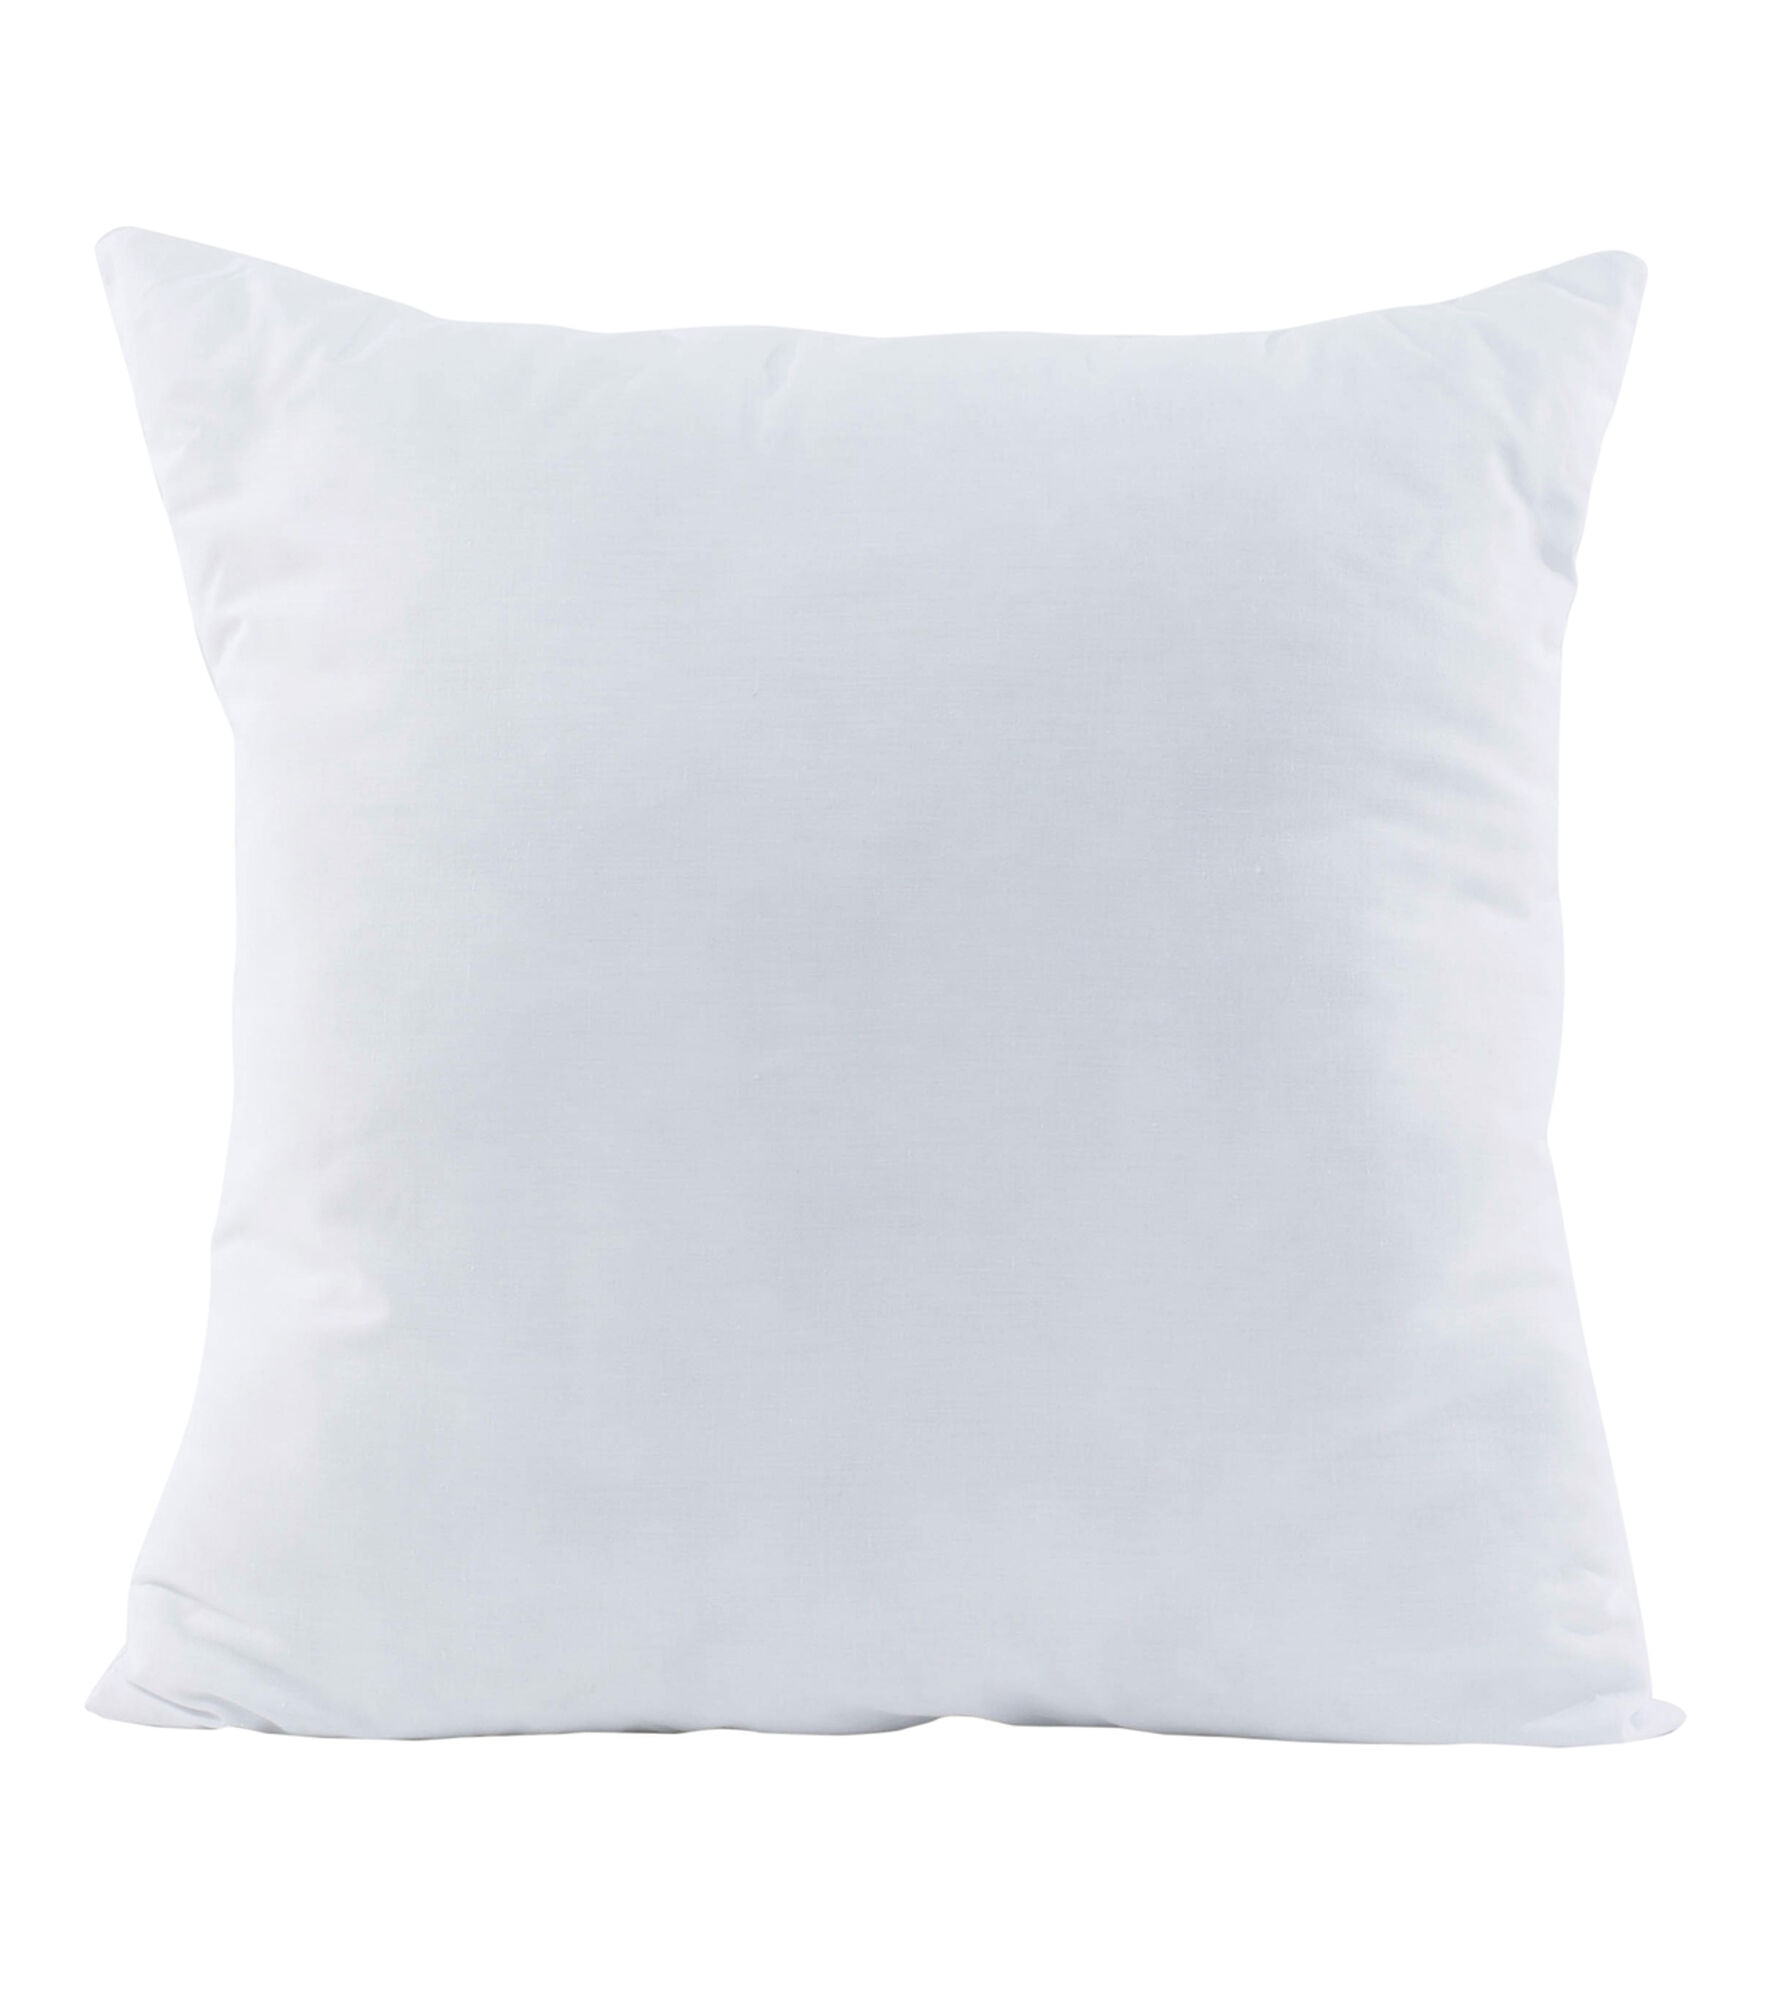 Poly Fil Premier 22x22" Oversized Pillow Insert, Soft N Crafty Premier 22", hi-res